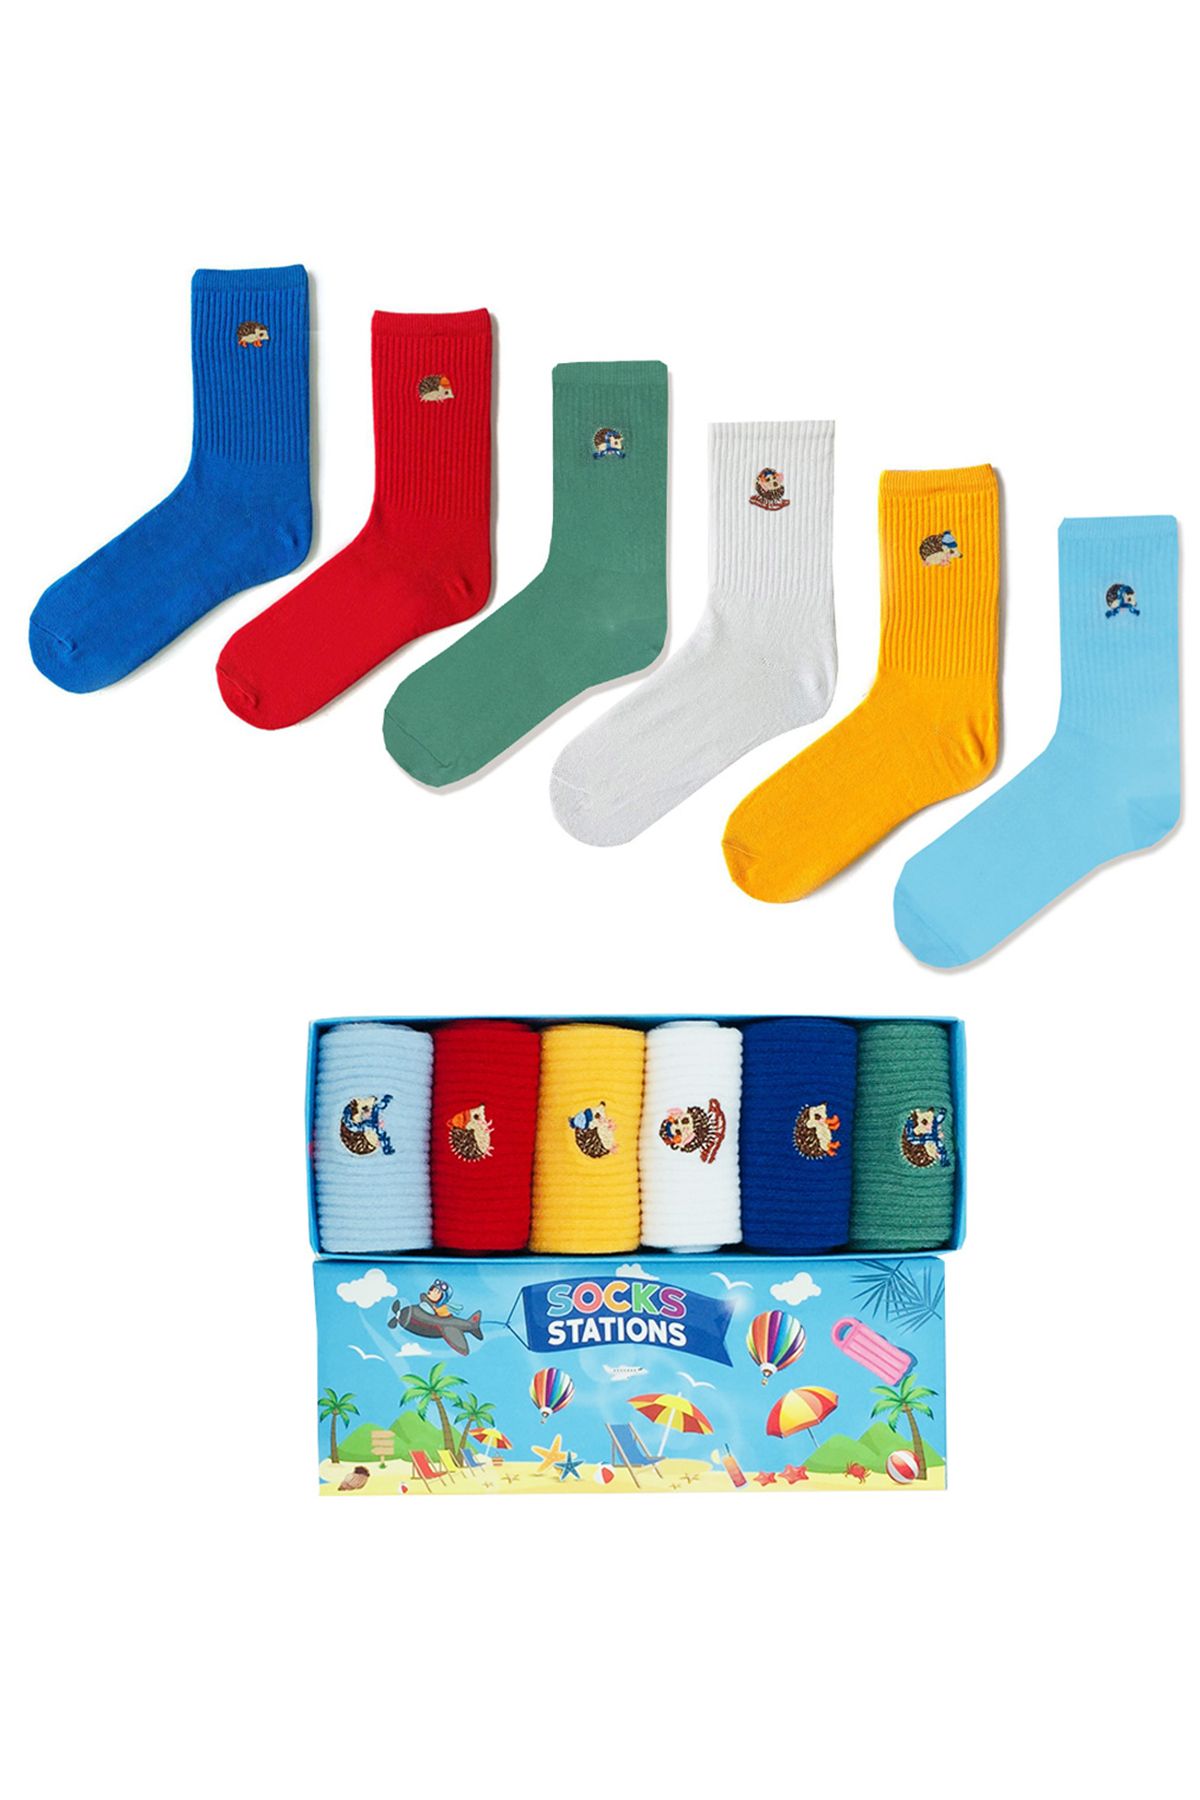 Socks Stations Ünisex Renkli Kirpi Nakışlı Desenli Çorap Kutusu 6'lı